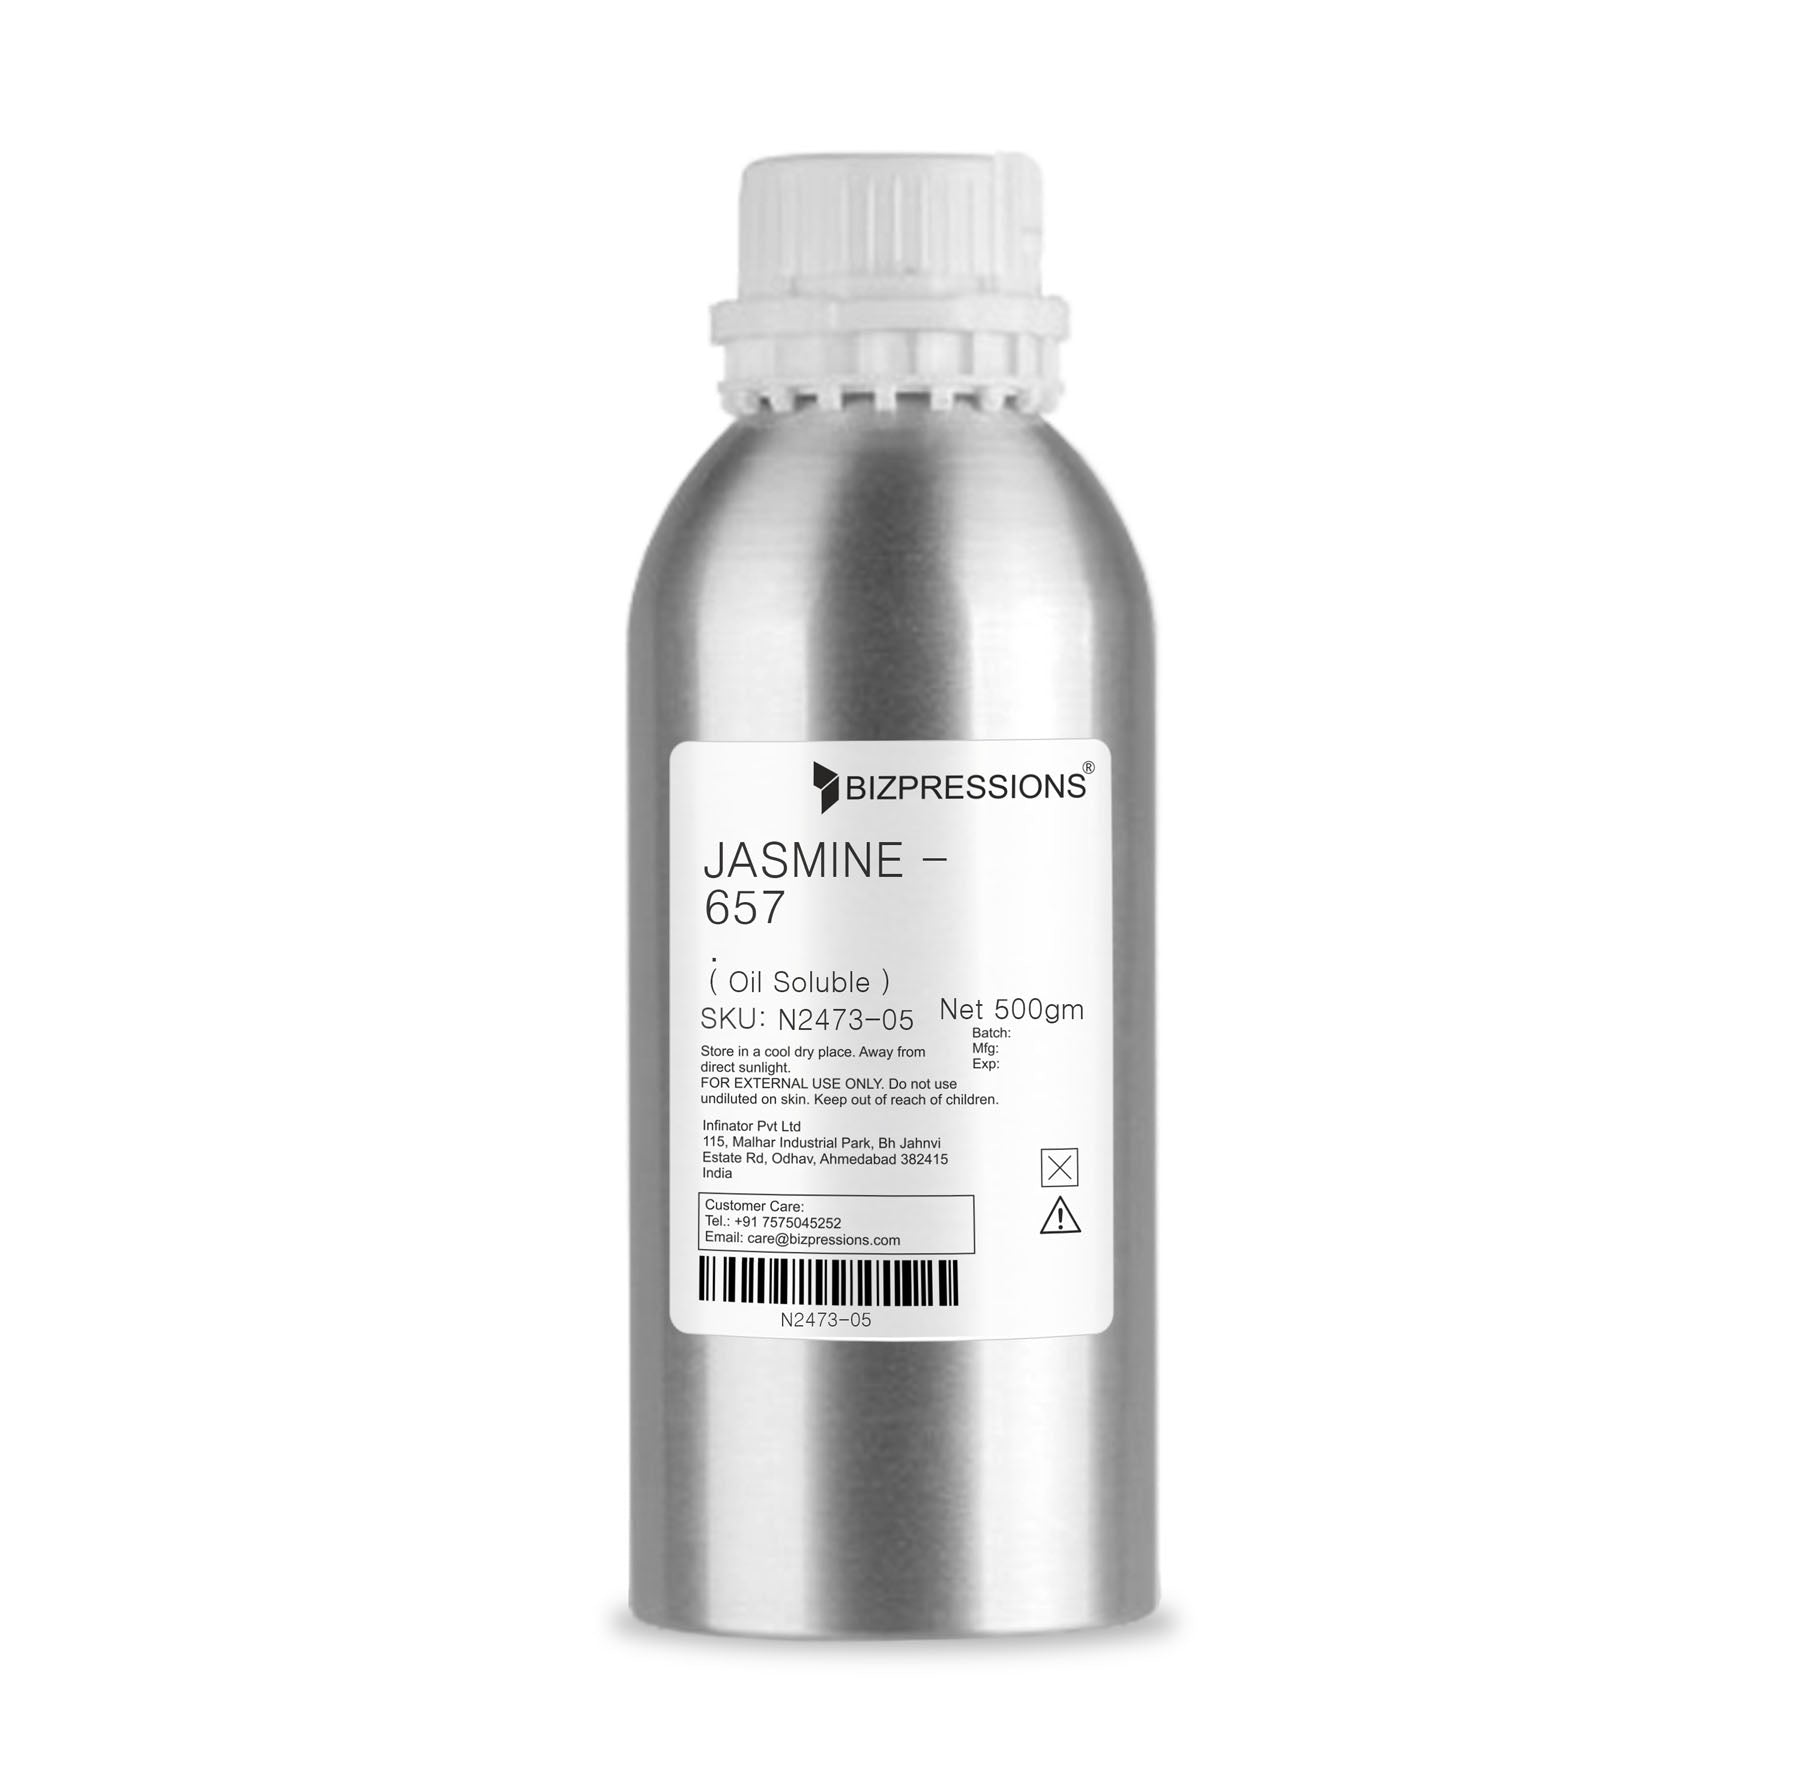 JASMINE - 657 - Fragrance ( Oil Soluble ) - 500 gm